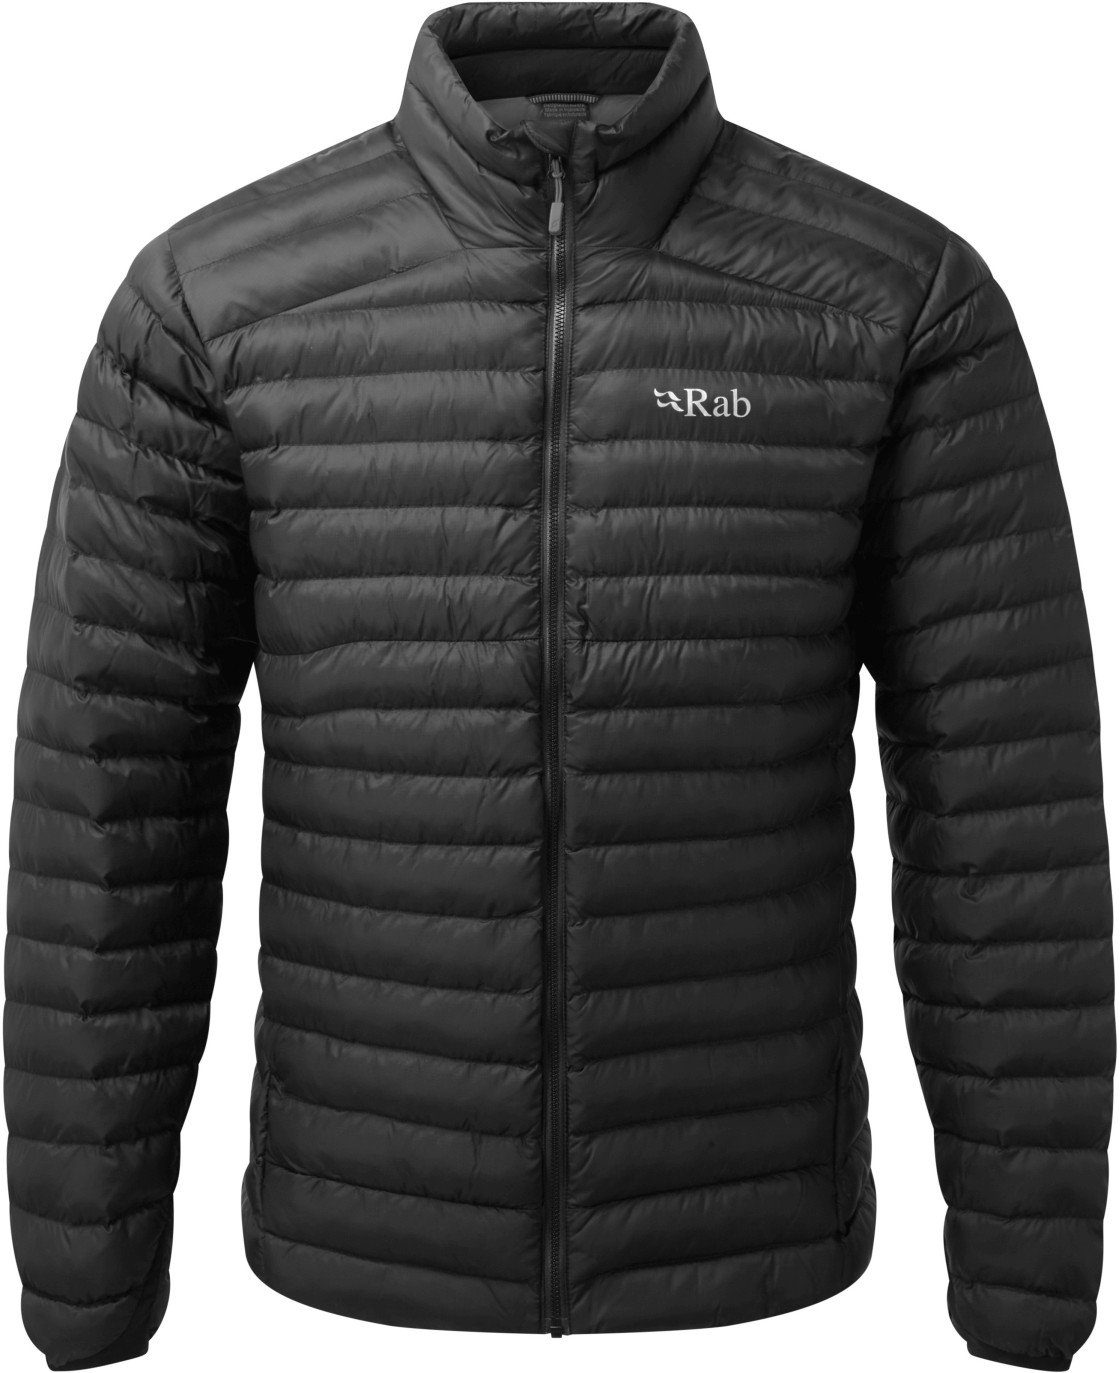 Cirrus Jacket Winterjacke Rab black